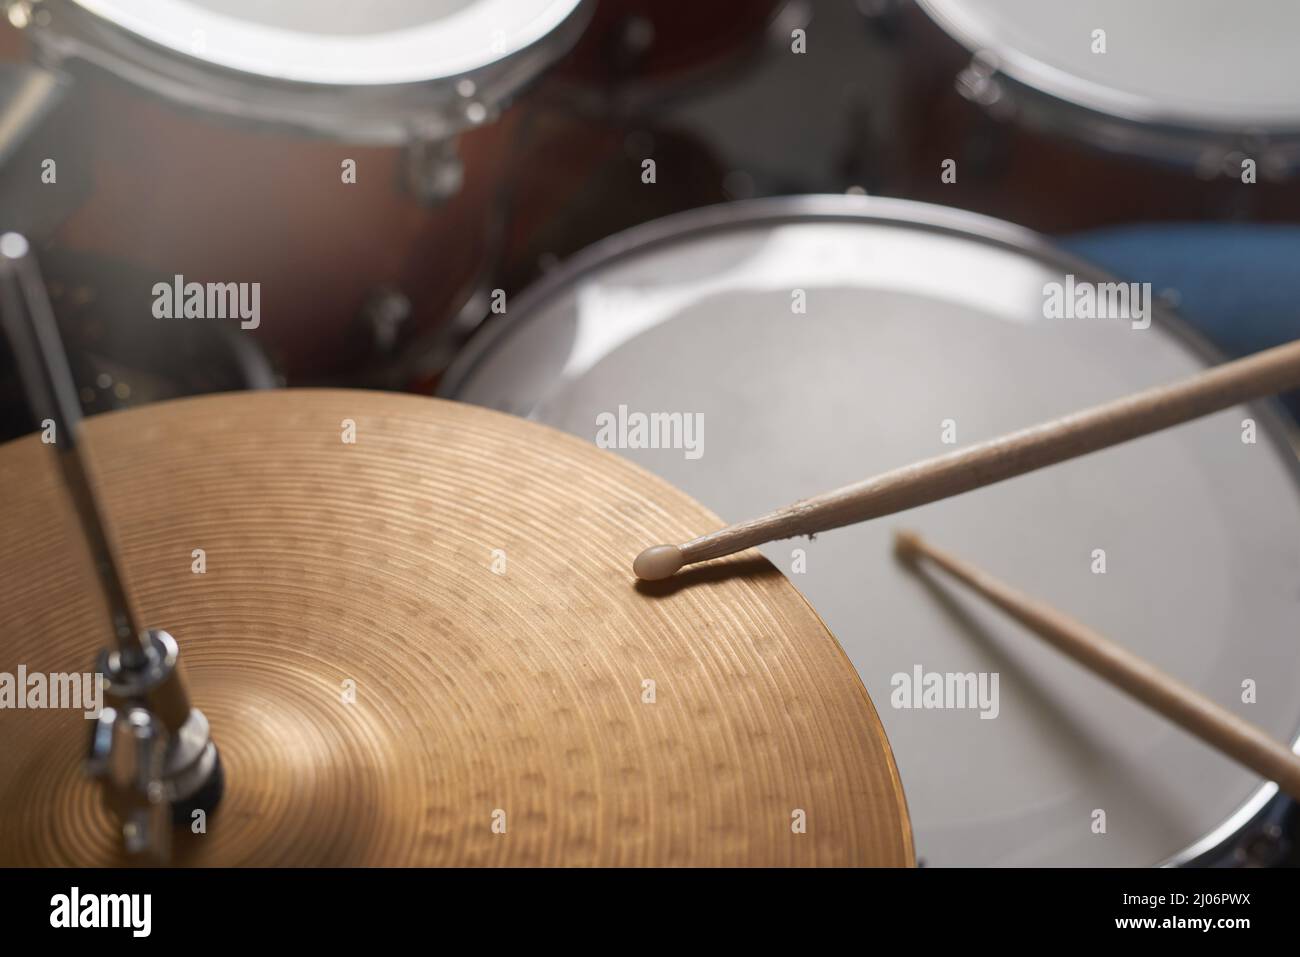 Making musical magic. Shot of a drum kit sitting in a music studio. Stock Photo